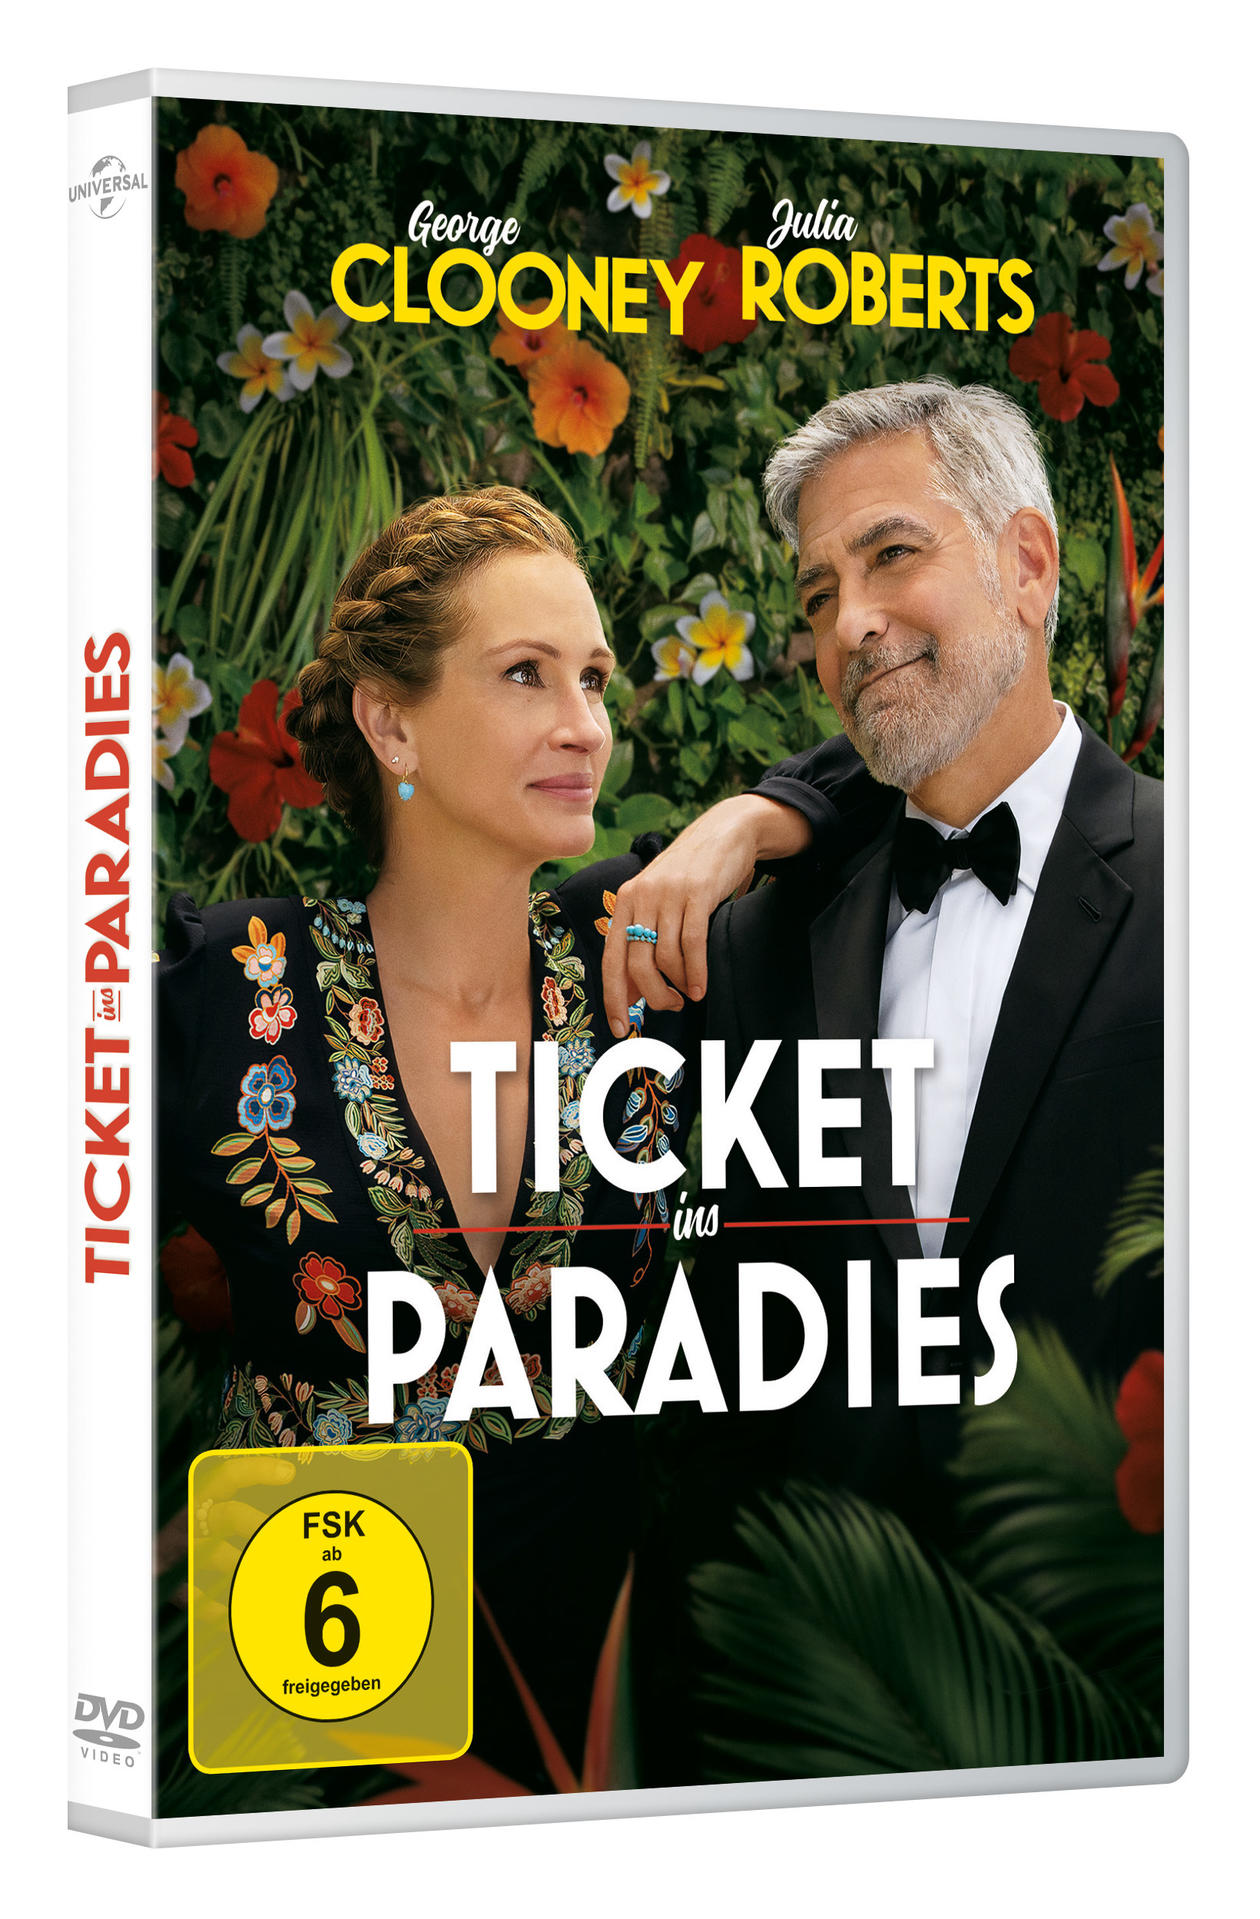 Ticket Paradies ins DVD